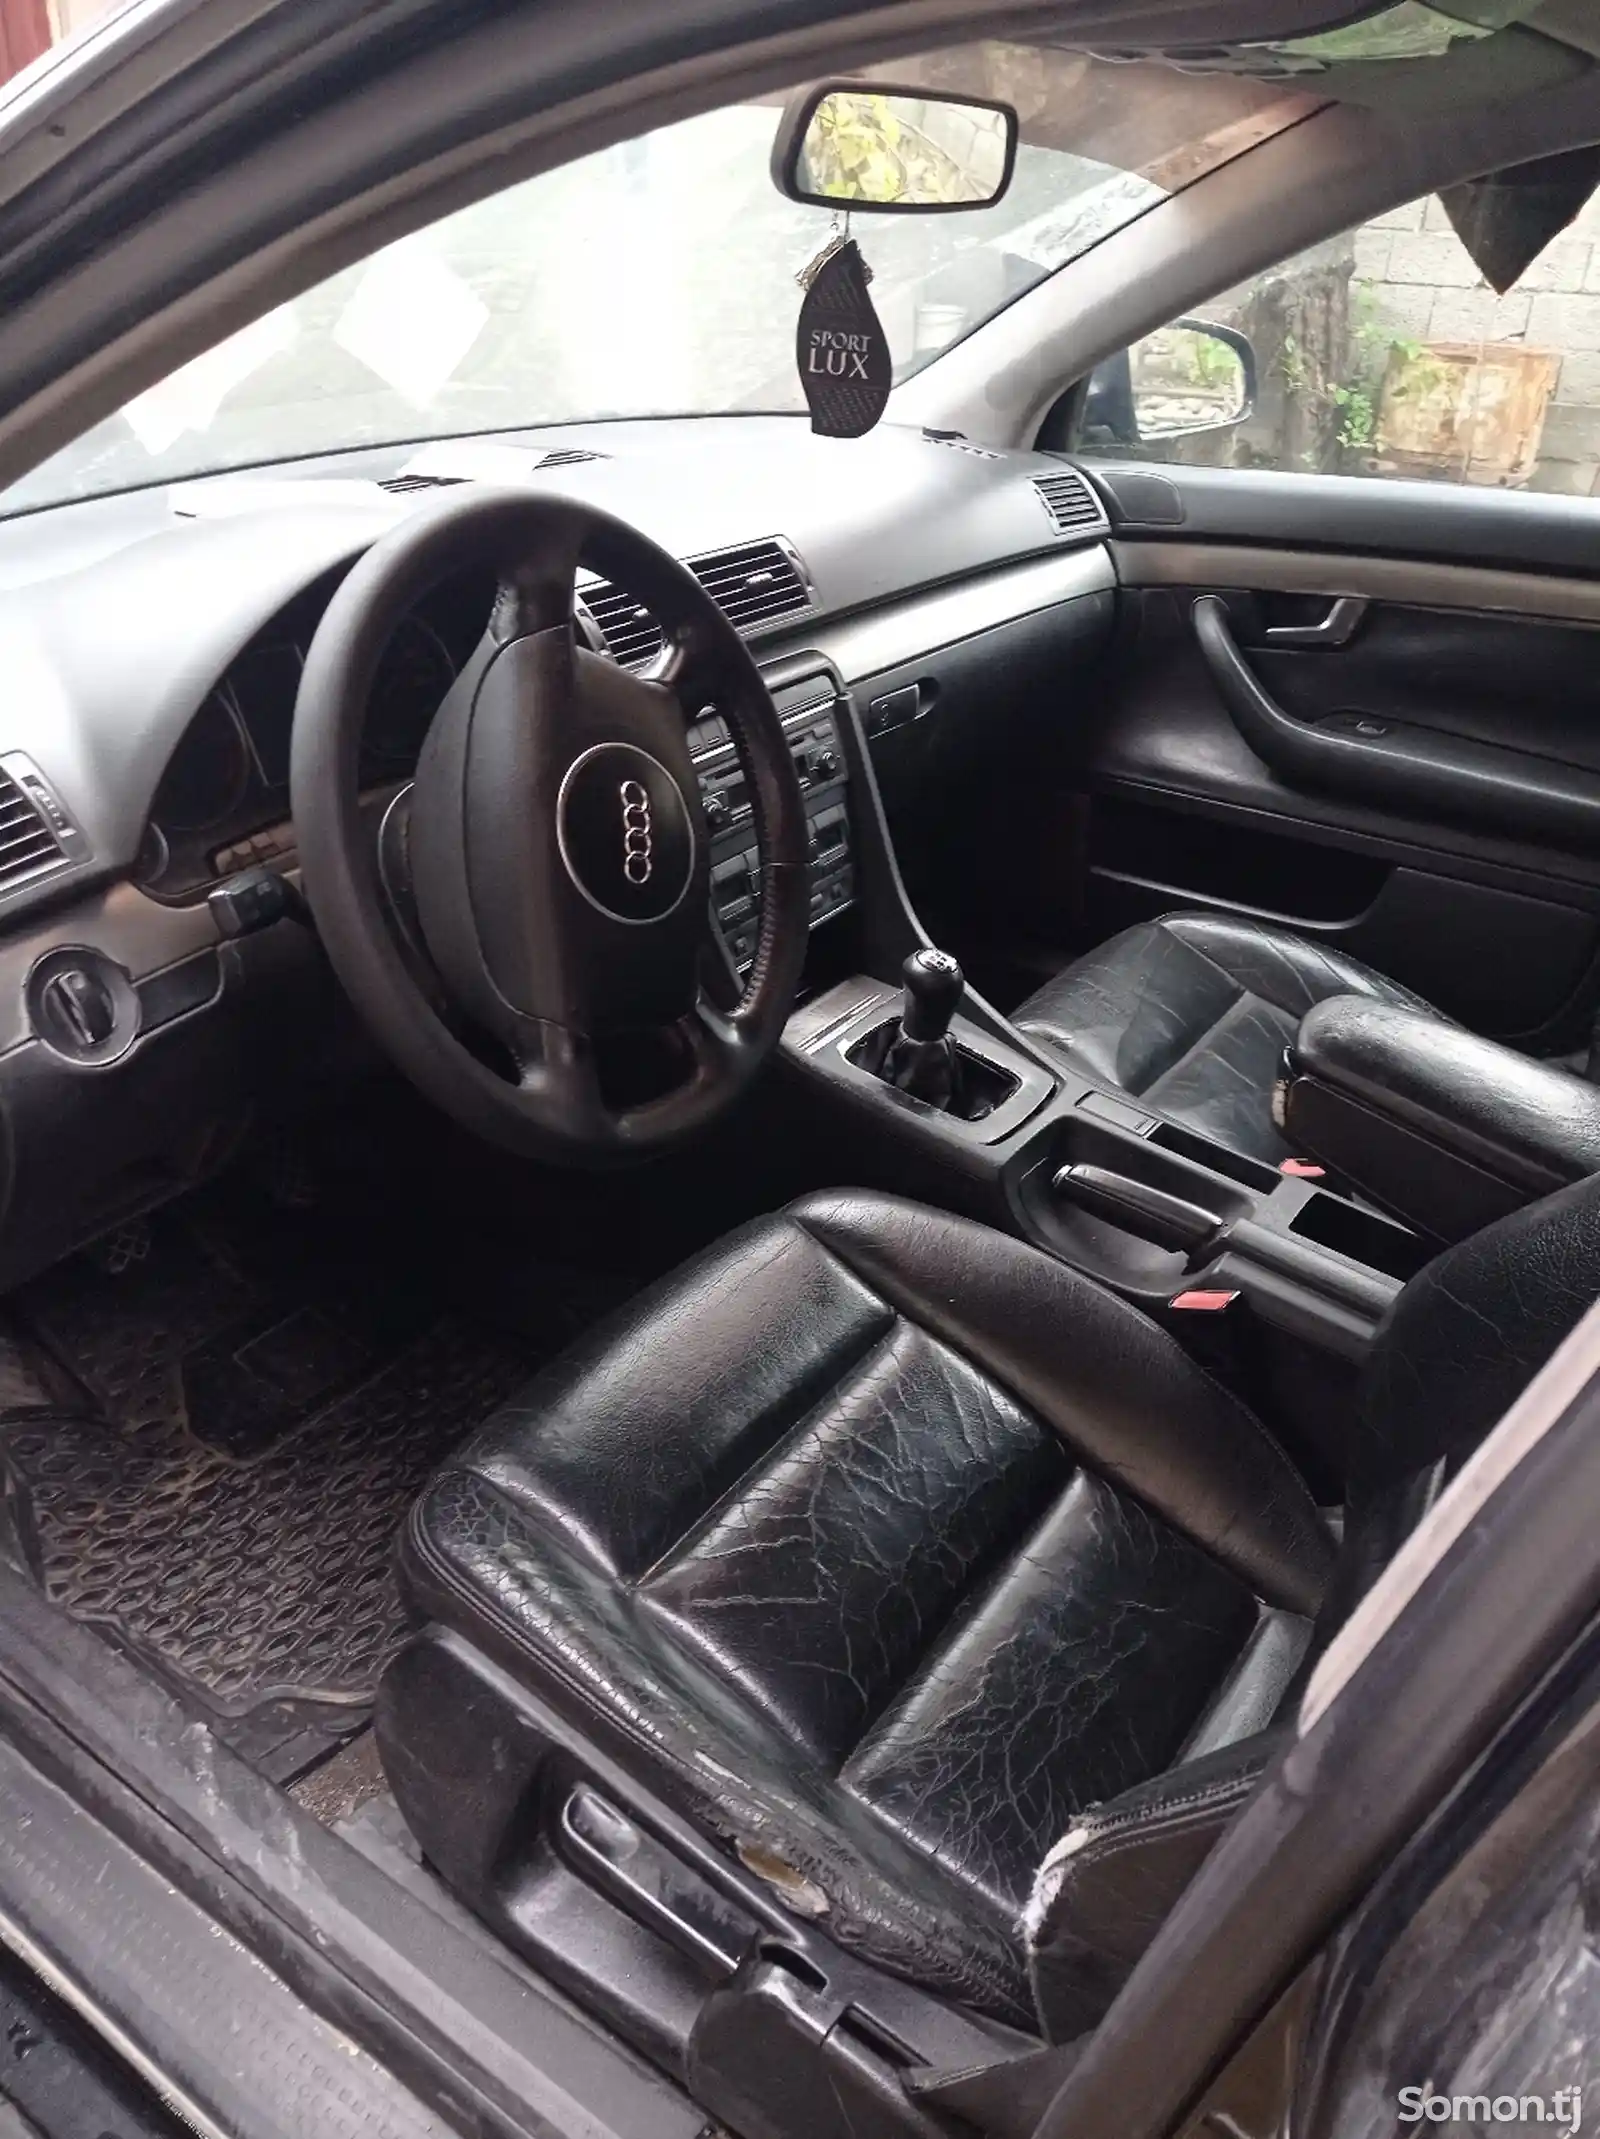 Audi A4, 2002-2